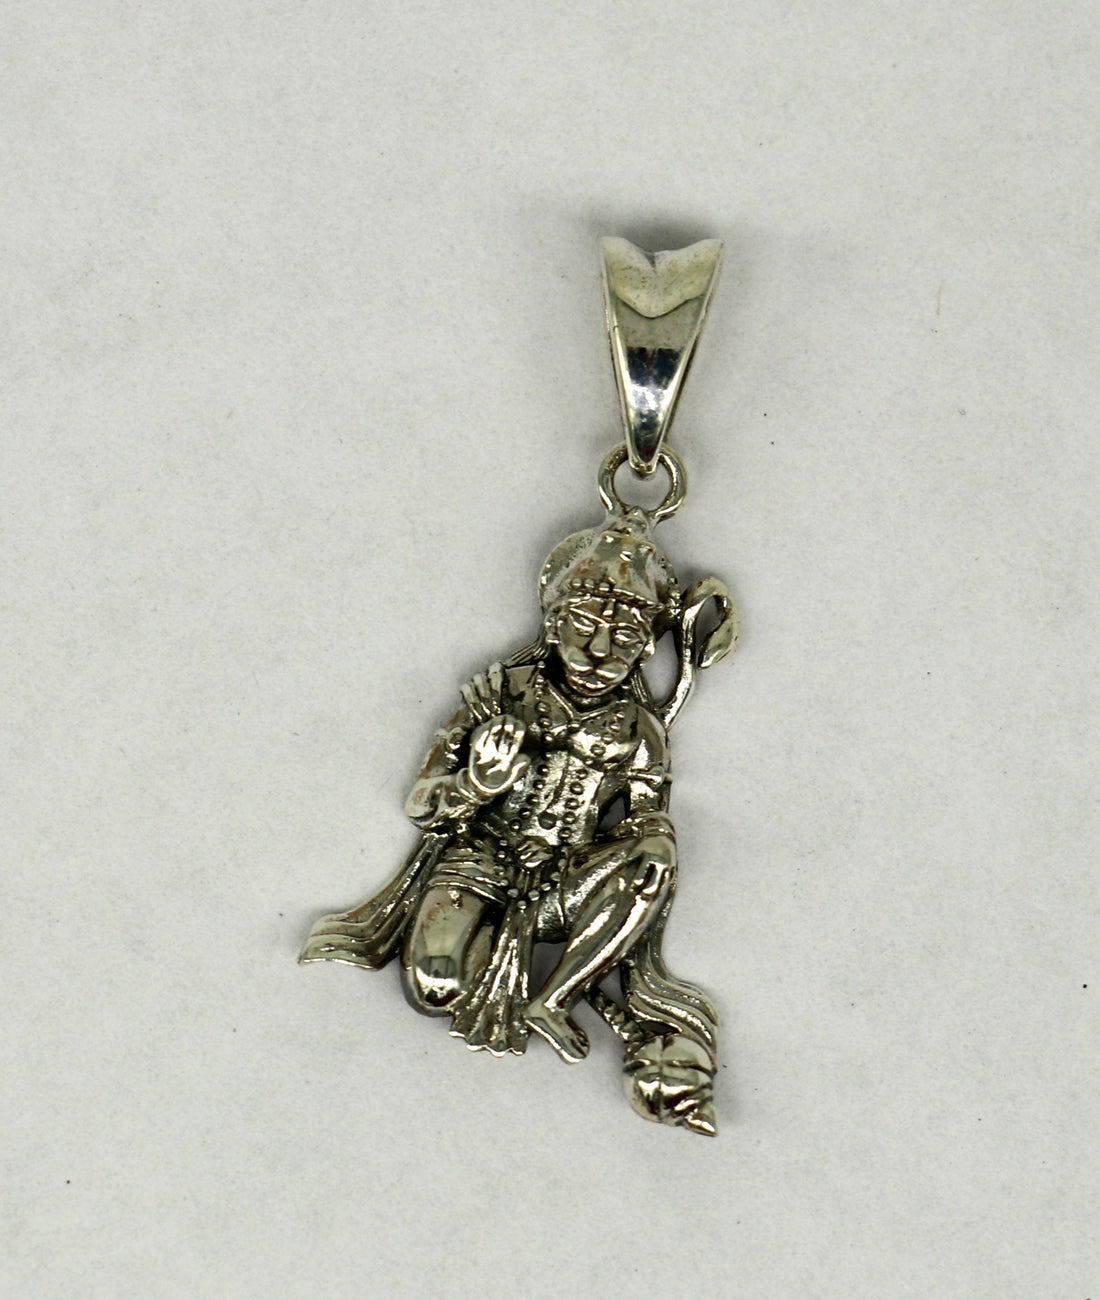 925 sterling silver handmade idol Hanuman ji pendant, amazing stylish unisex pendant locket personalized jewelry tribal jewelry ssp439 - TRIBAL ORNAMENTS